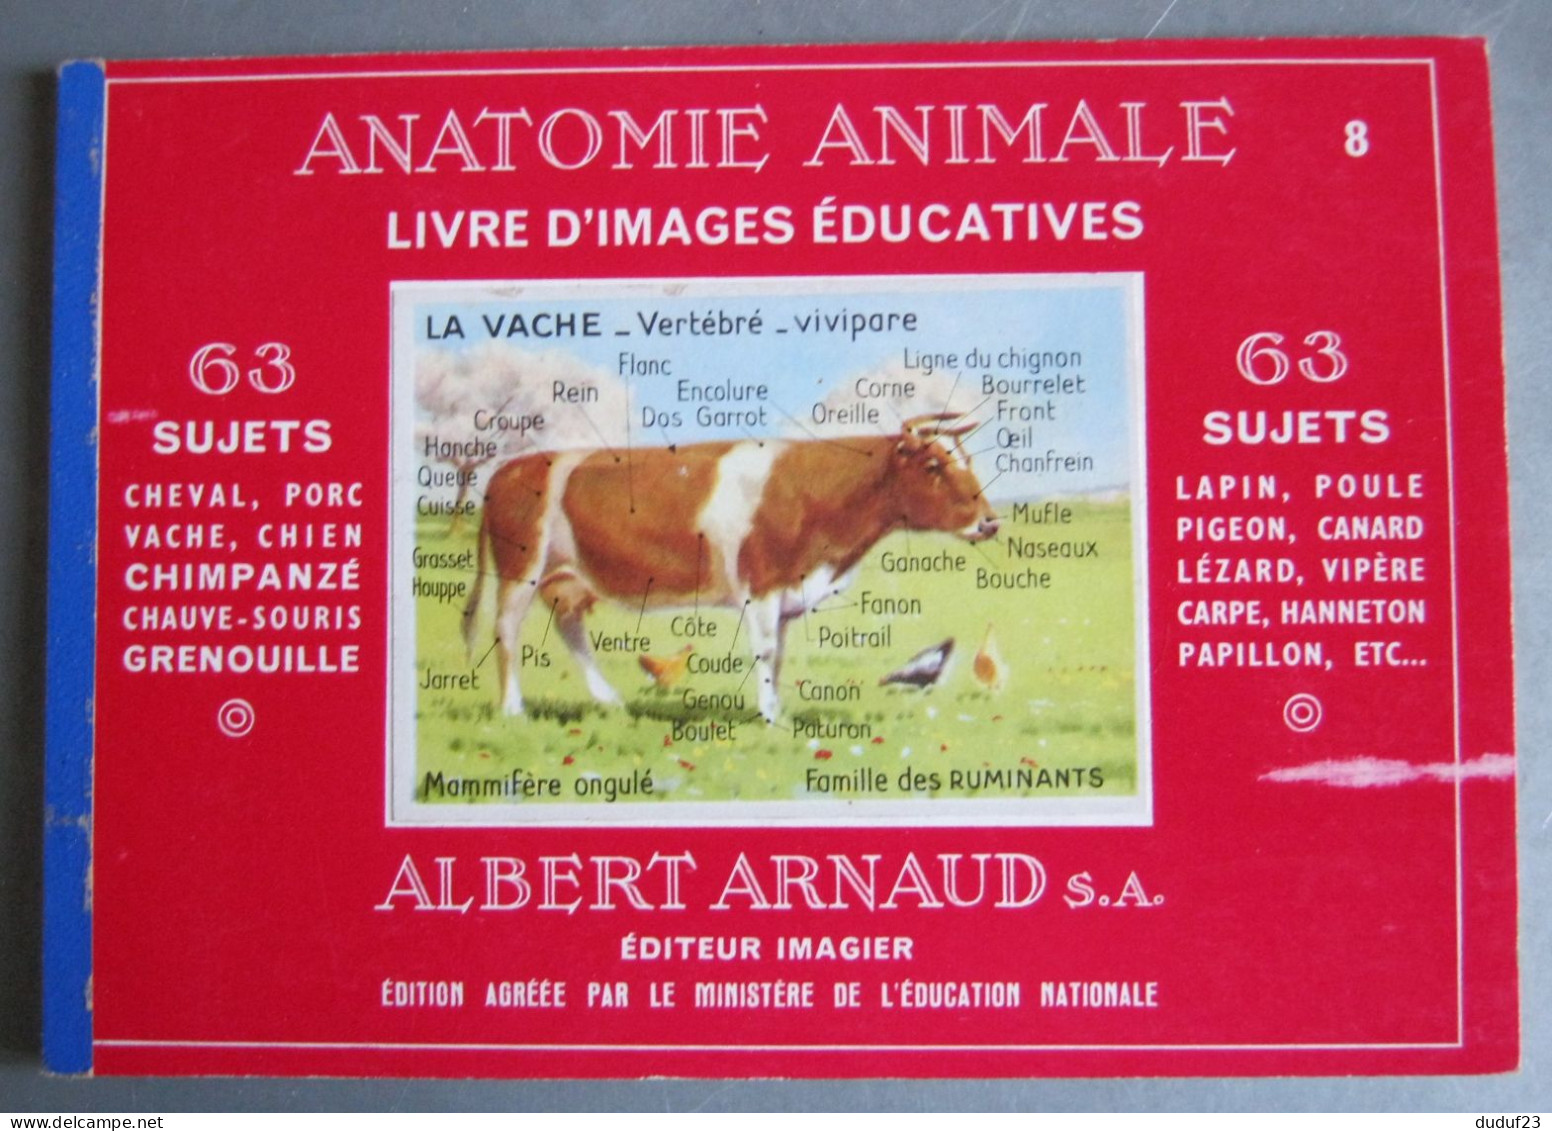 LIVRE D'IMAGES EDUCATIVES N°8 ANATOMIE ANIMALE ALBERT ARNAUD 63 SUJETS CIRCA 1960 - Chromo's